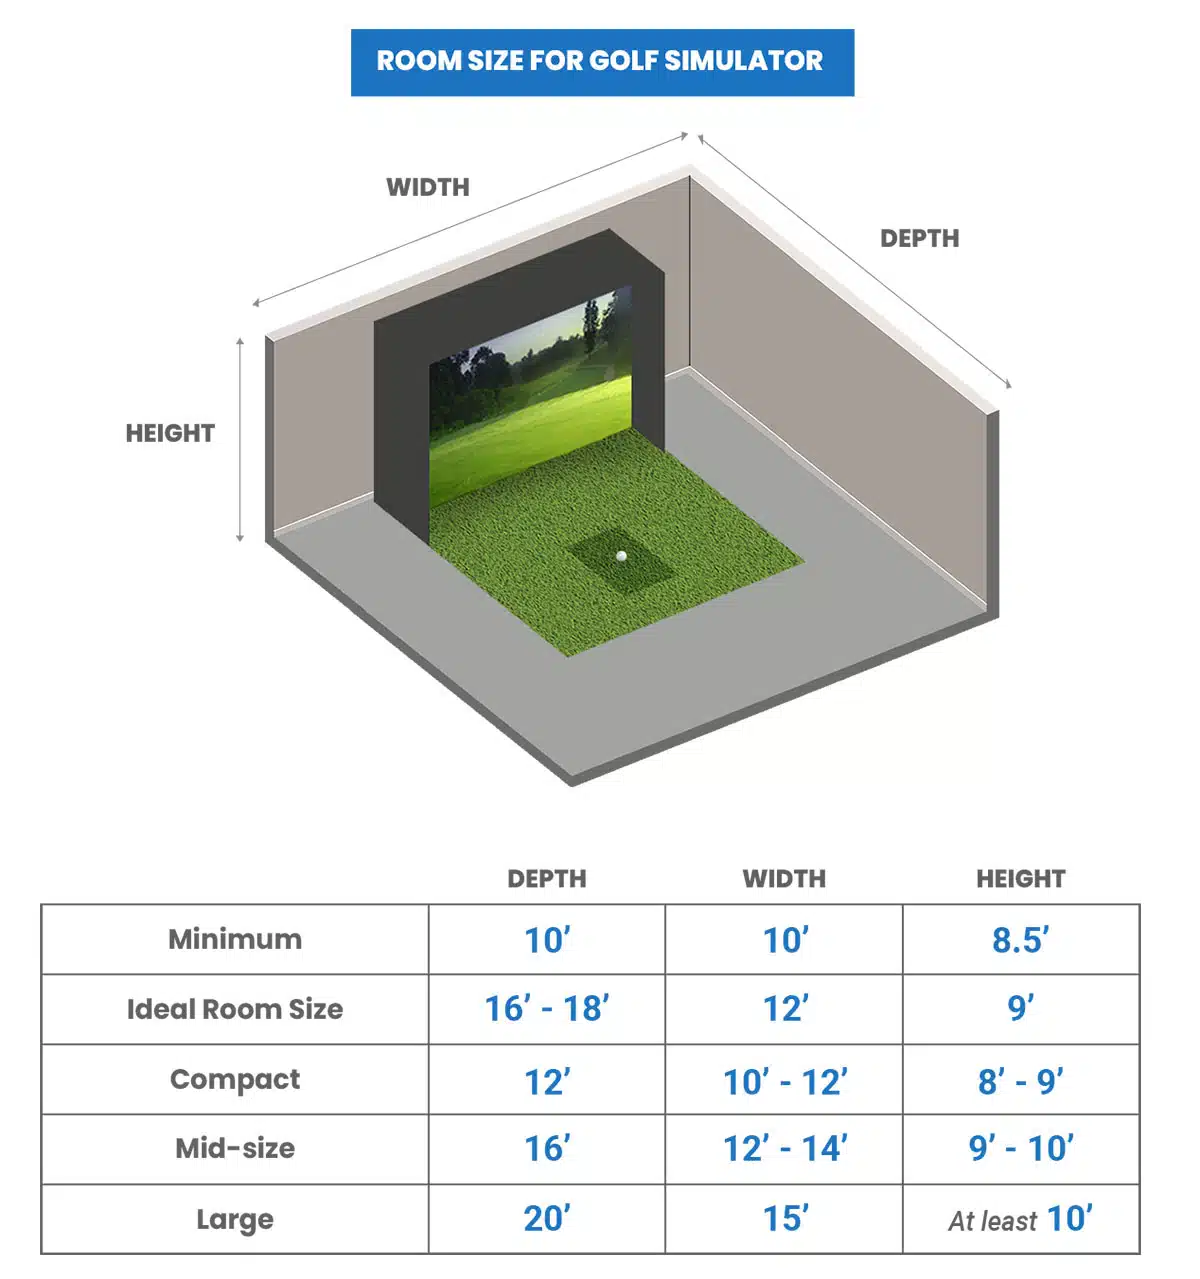 Golf simulator room sizes